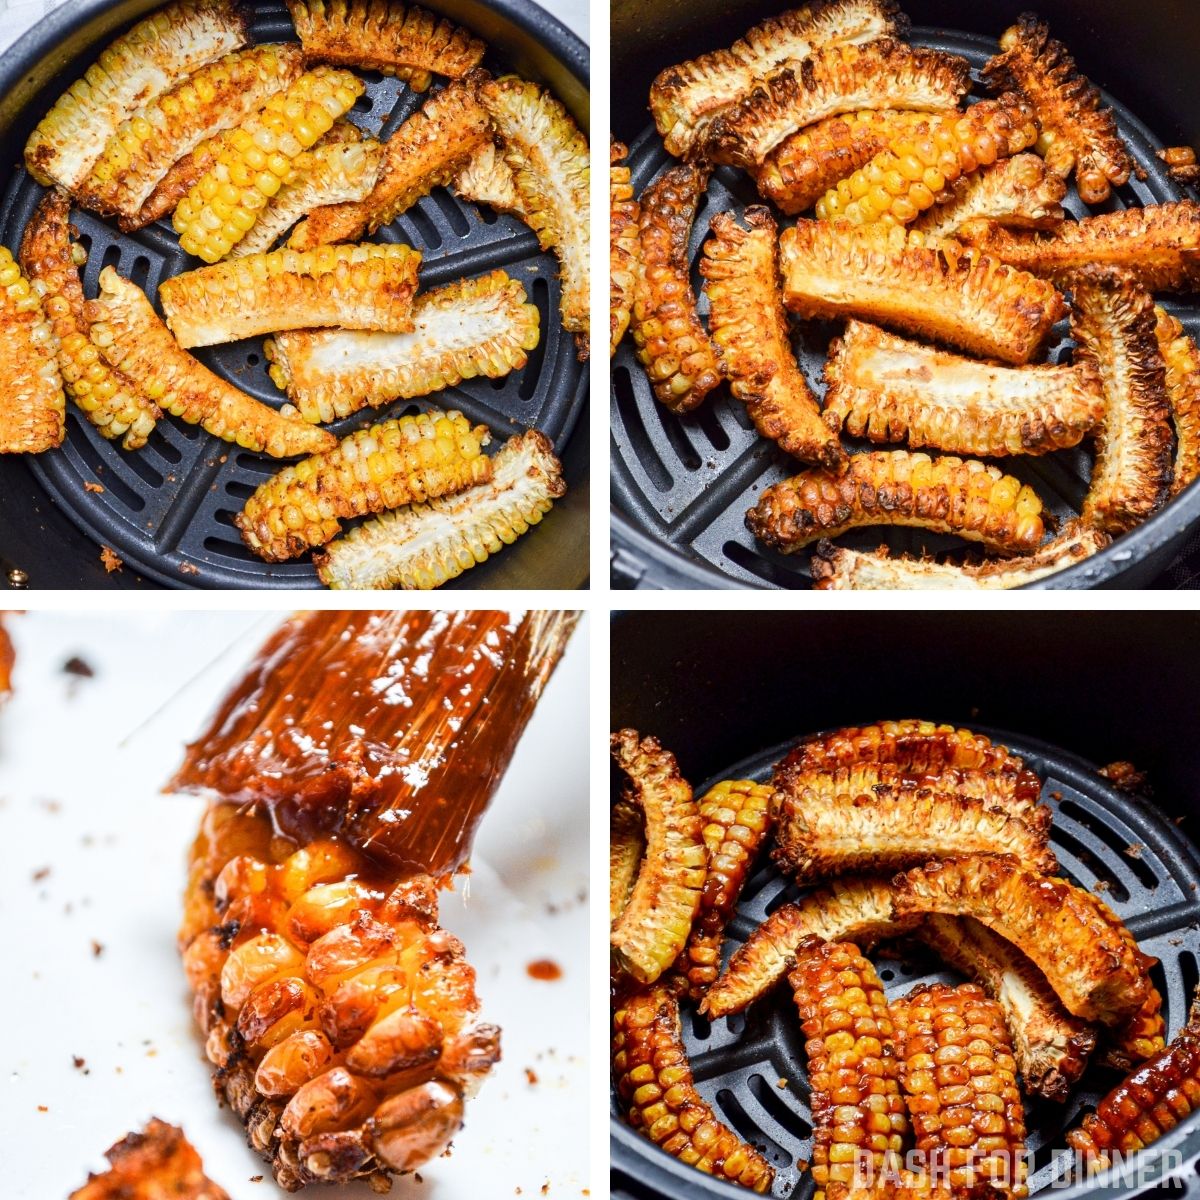 How to make air fryer corn ribs